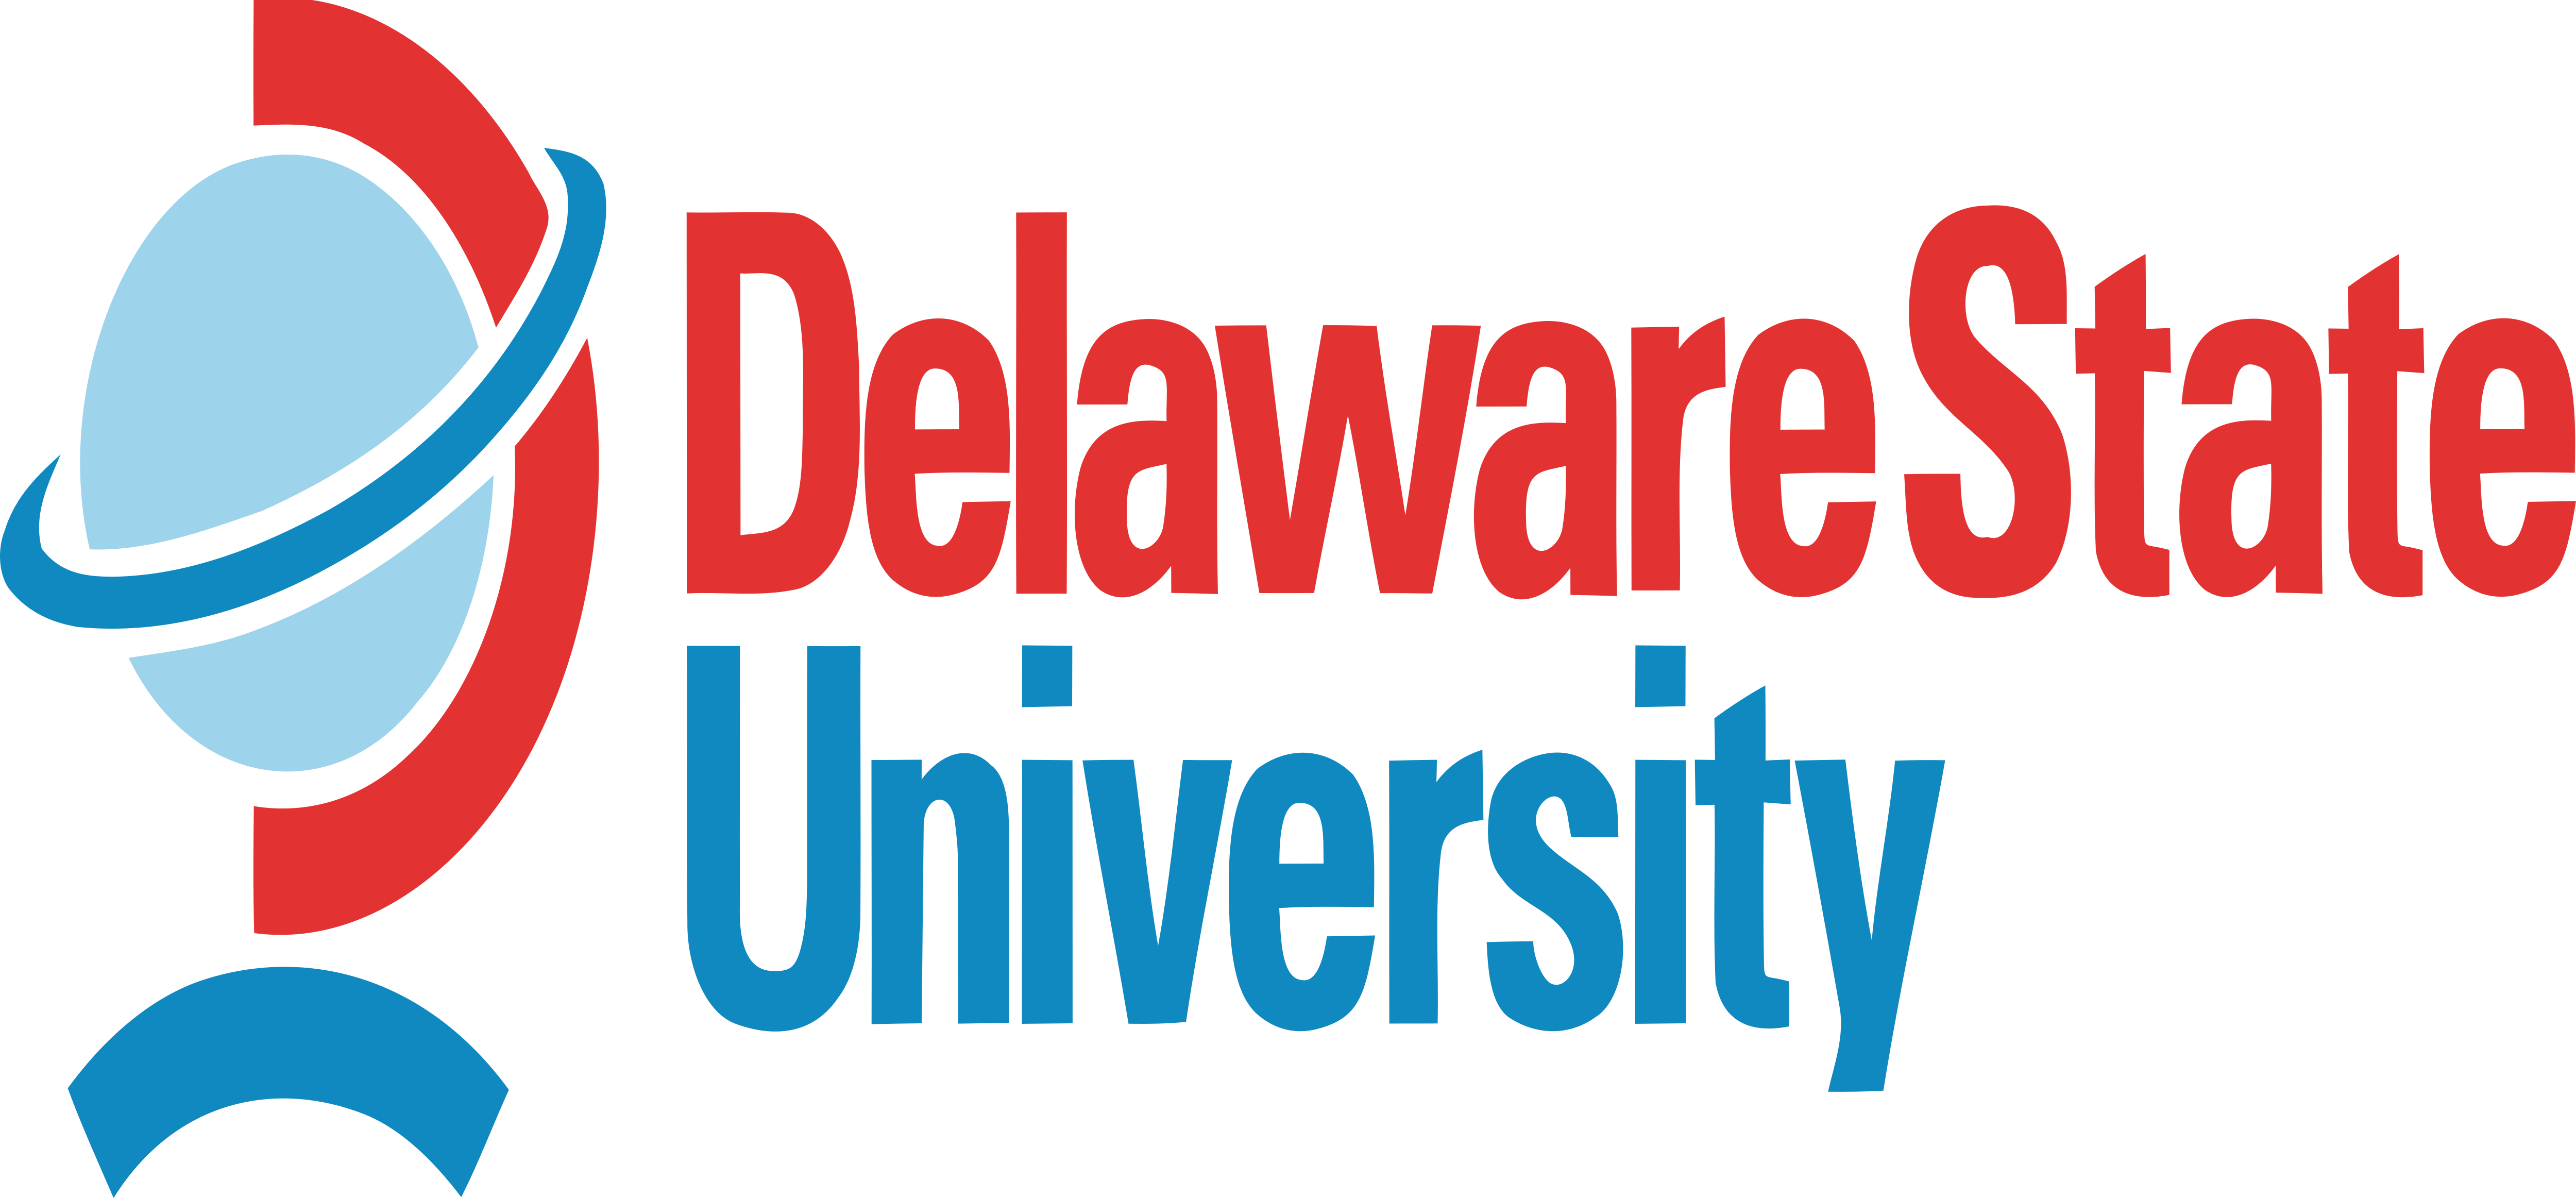 delaware state university logo images delaware state university logo